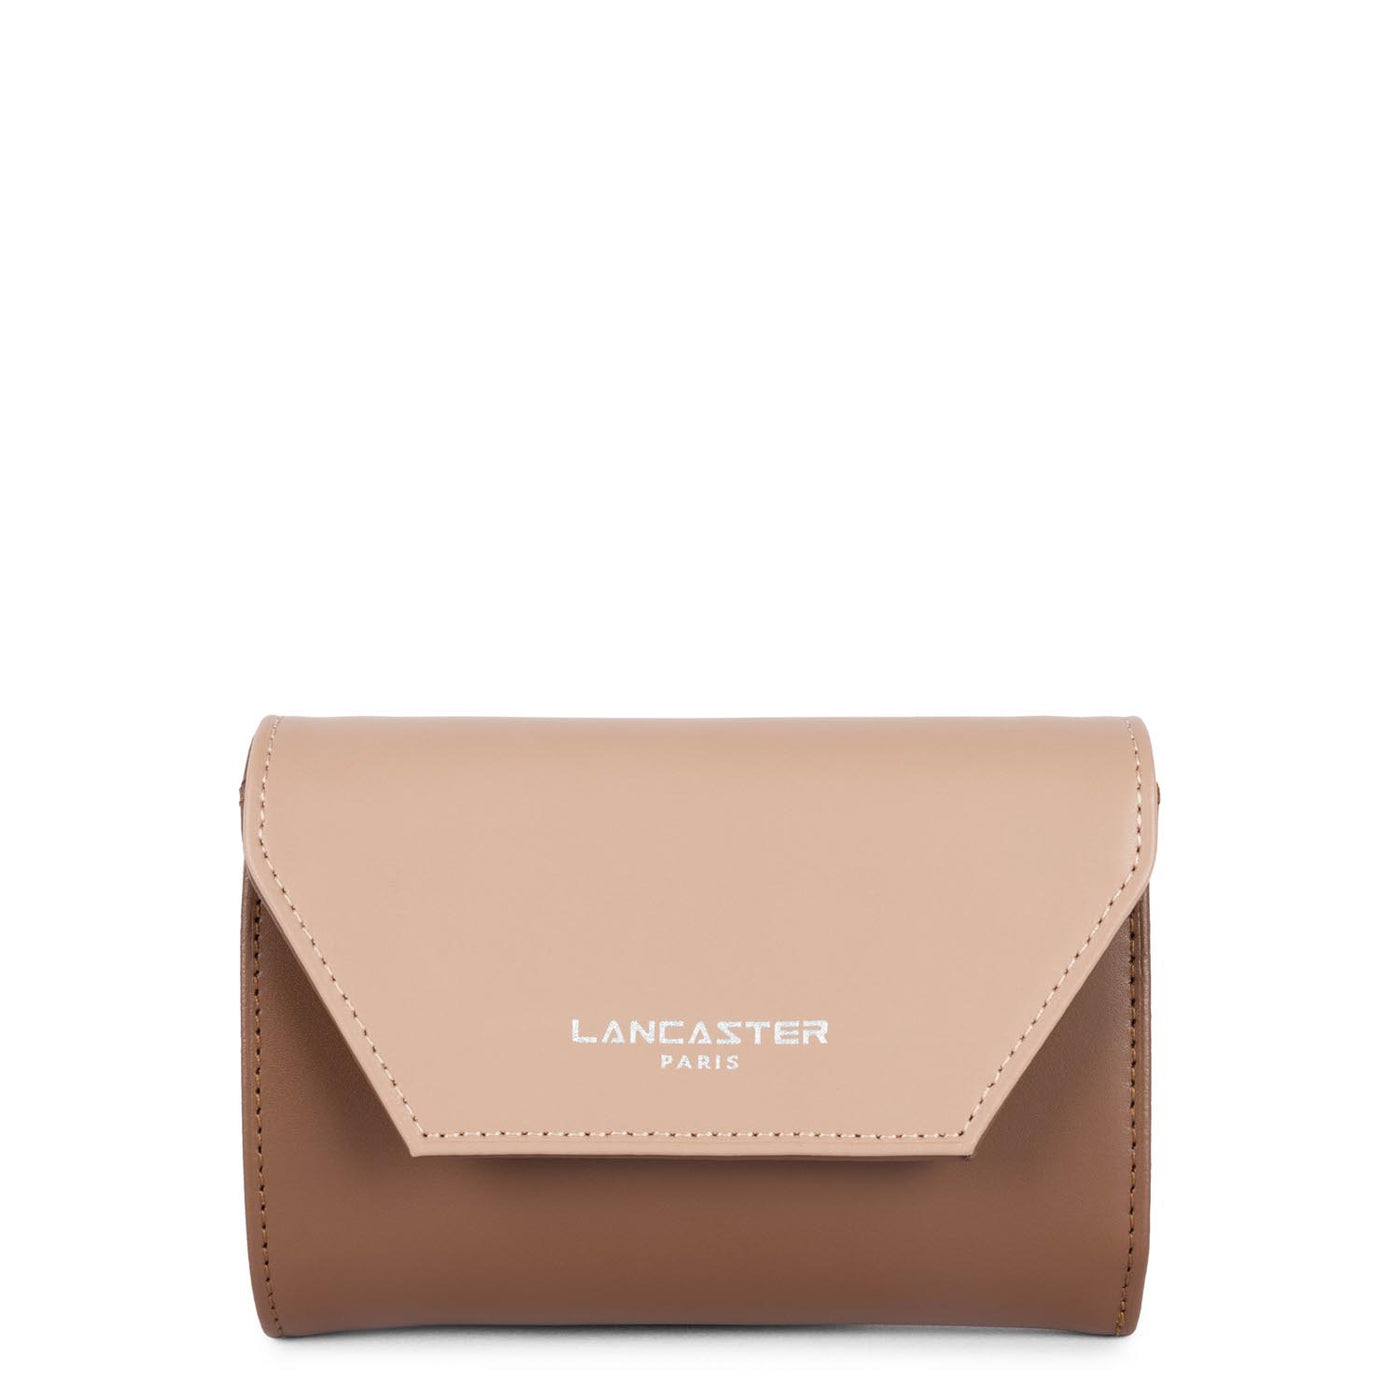 back to back wallet - smooth #couleur_vison-nude-fonc-marron